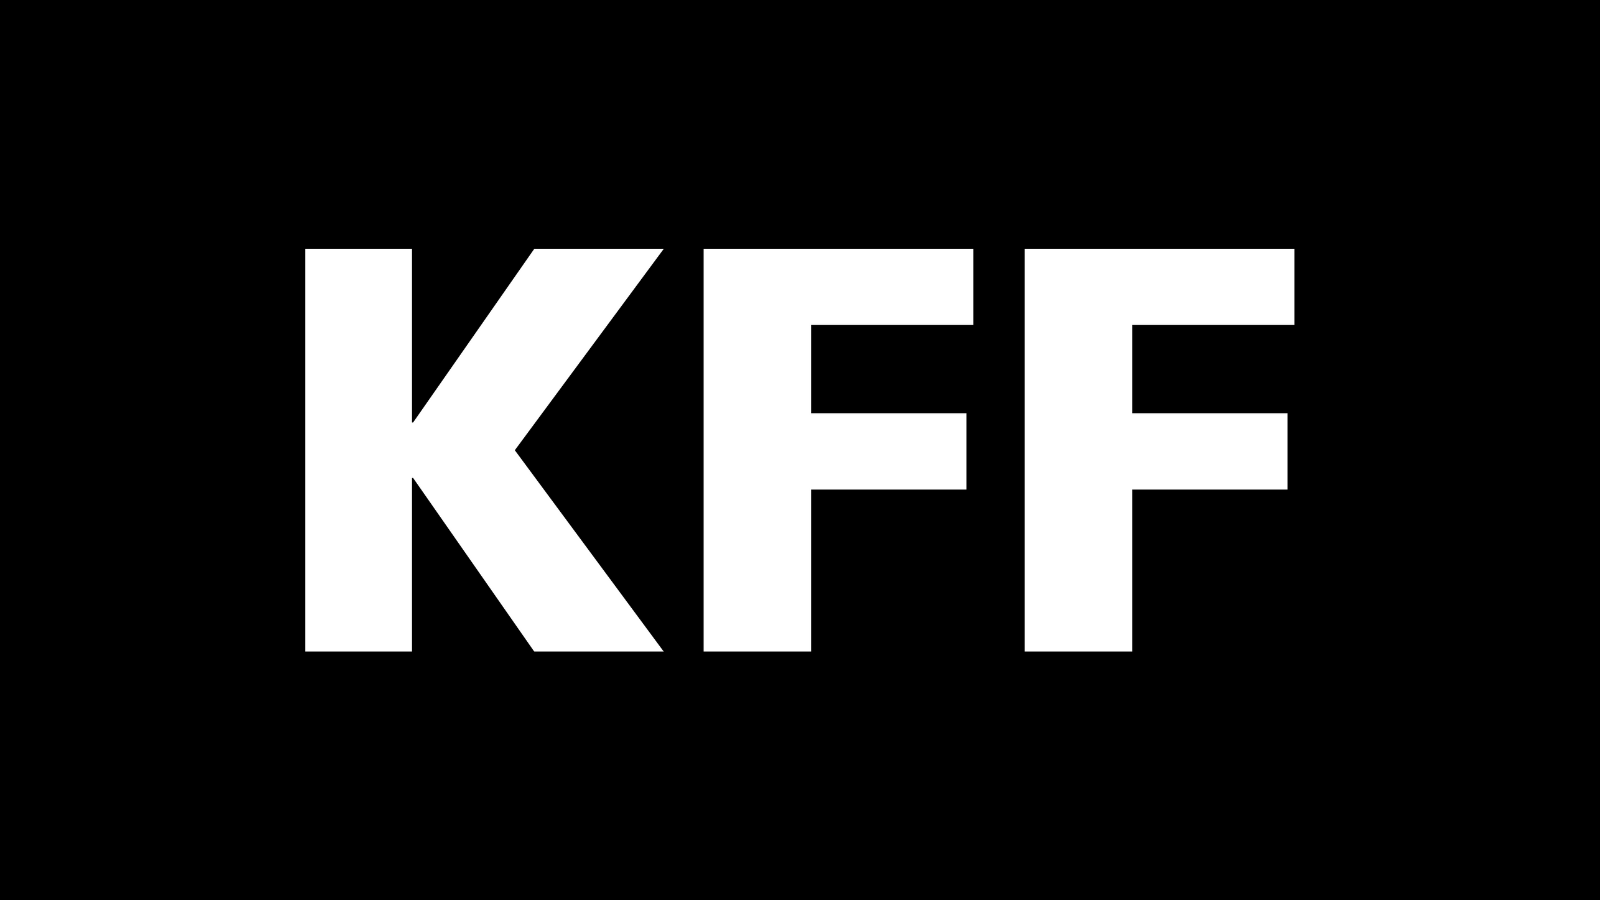 (c) Kff.org